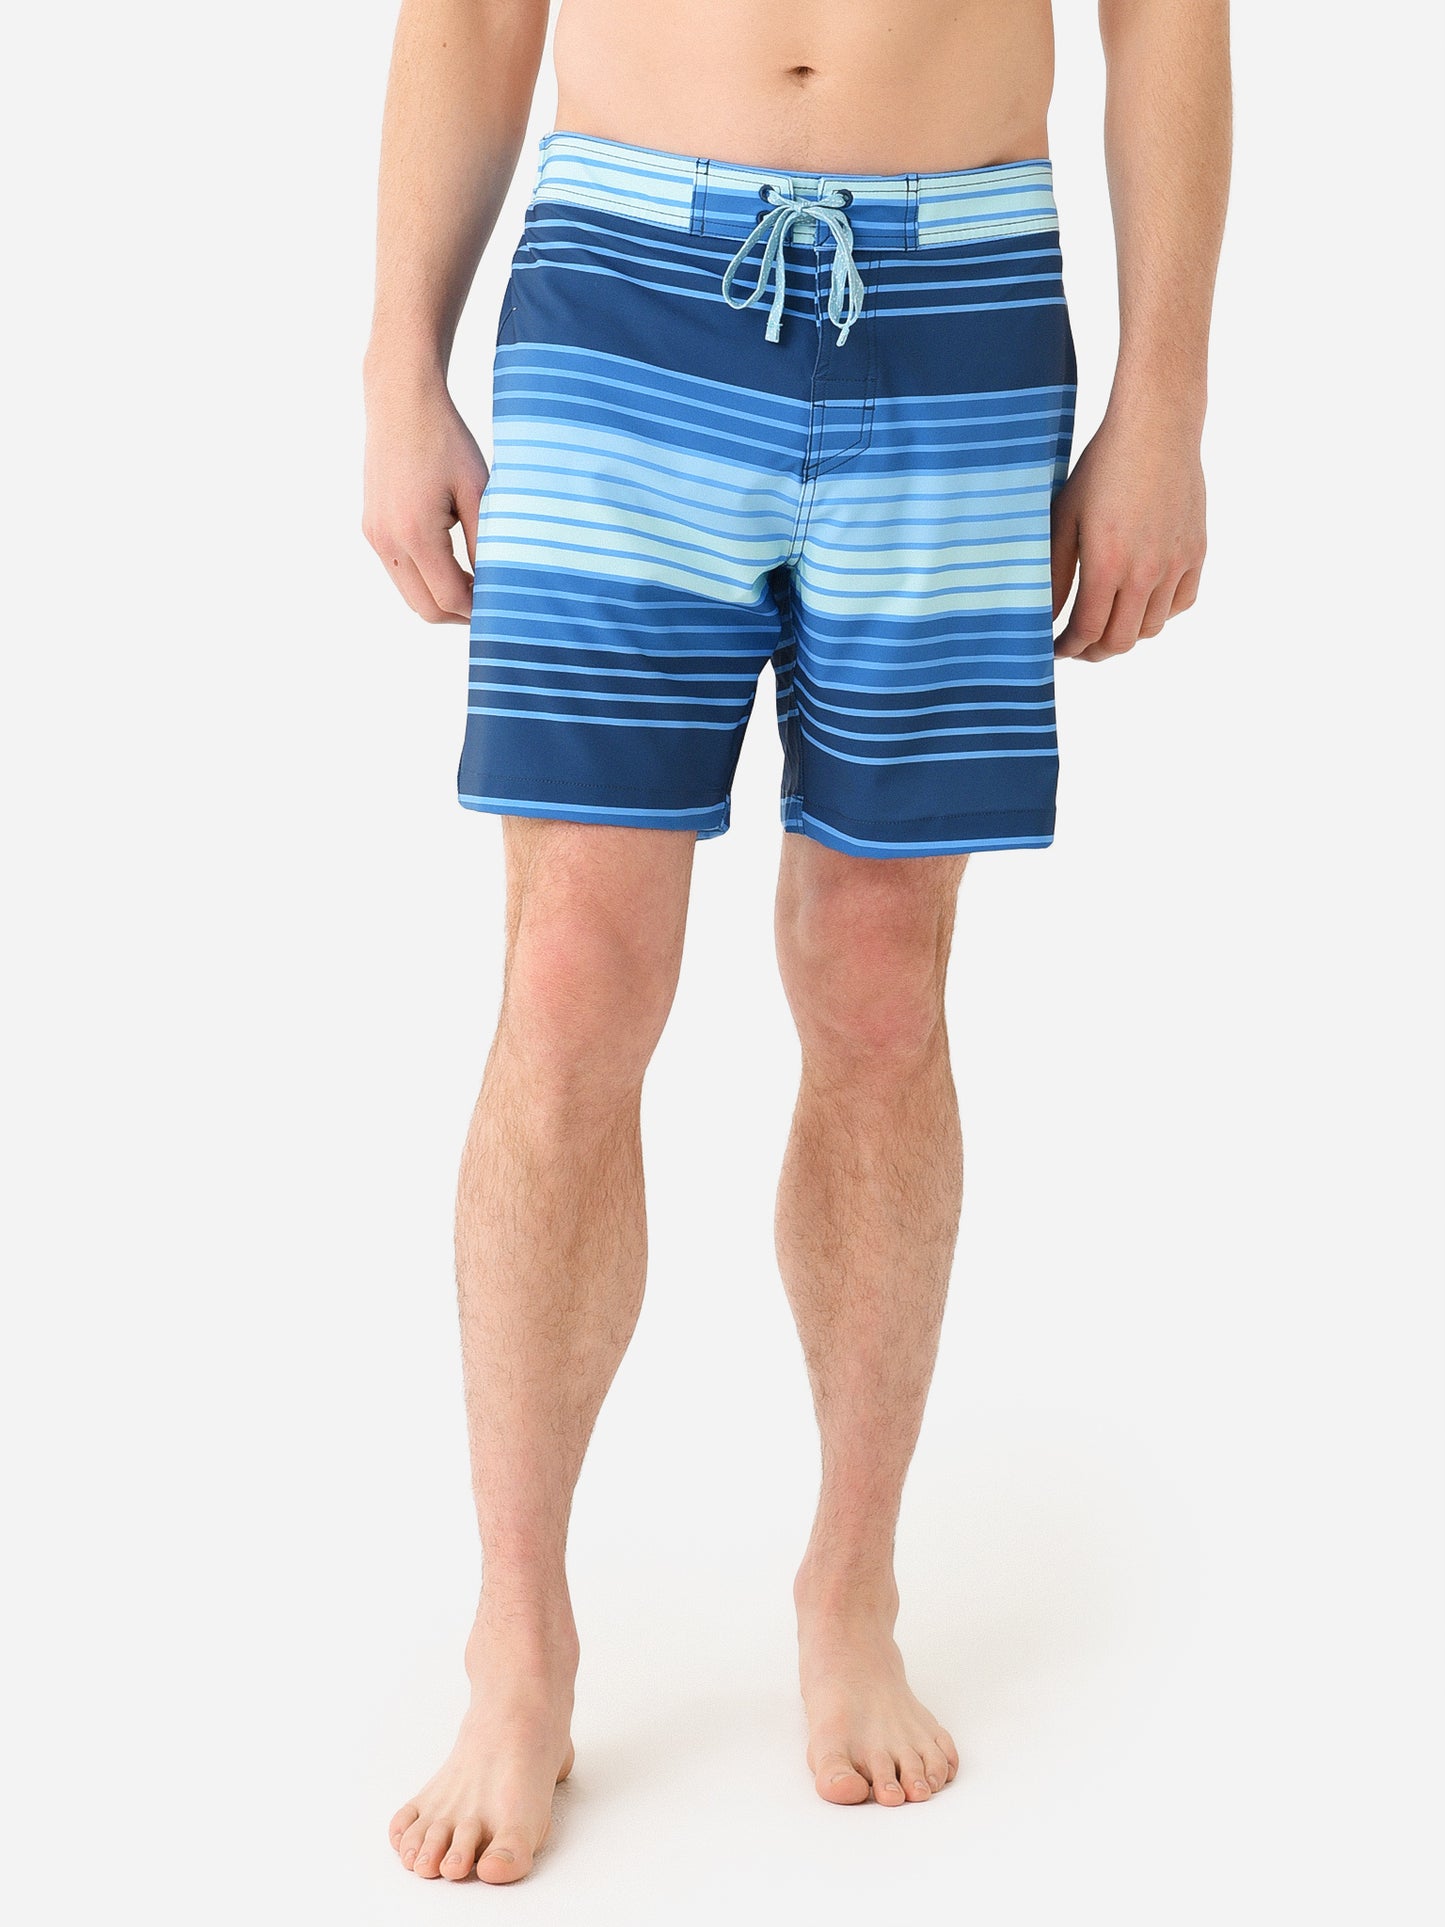 Southern Tide Men's Wateree Stripe Printed Swim Trunk